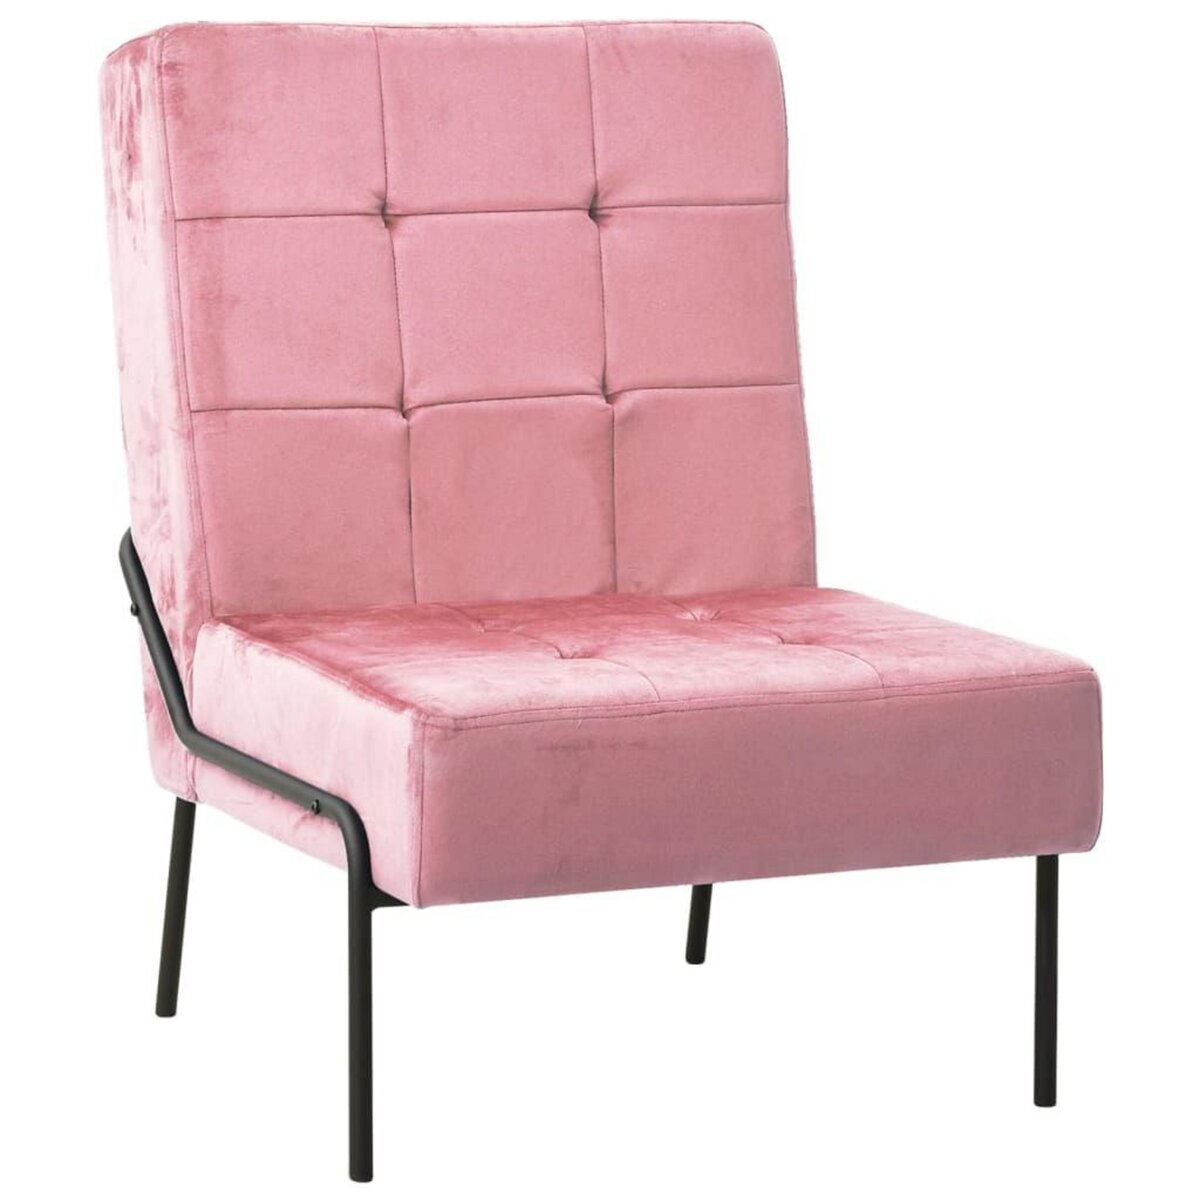 VIDAXL Chaise de relaxation 65x79x87 cm Rose Velours